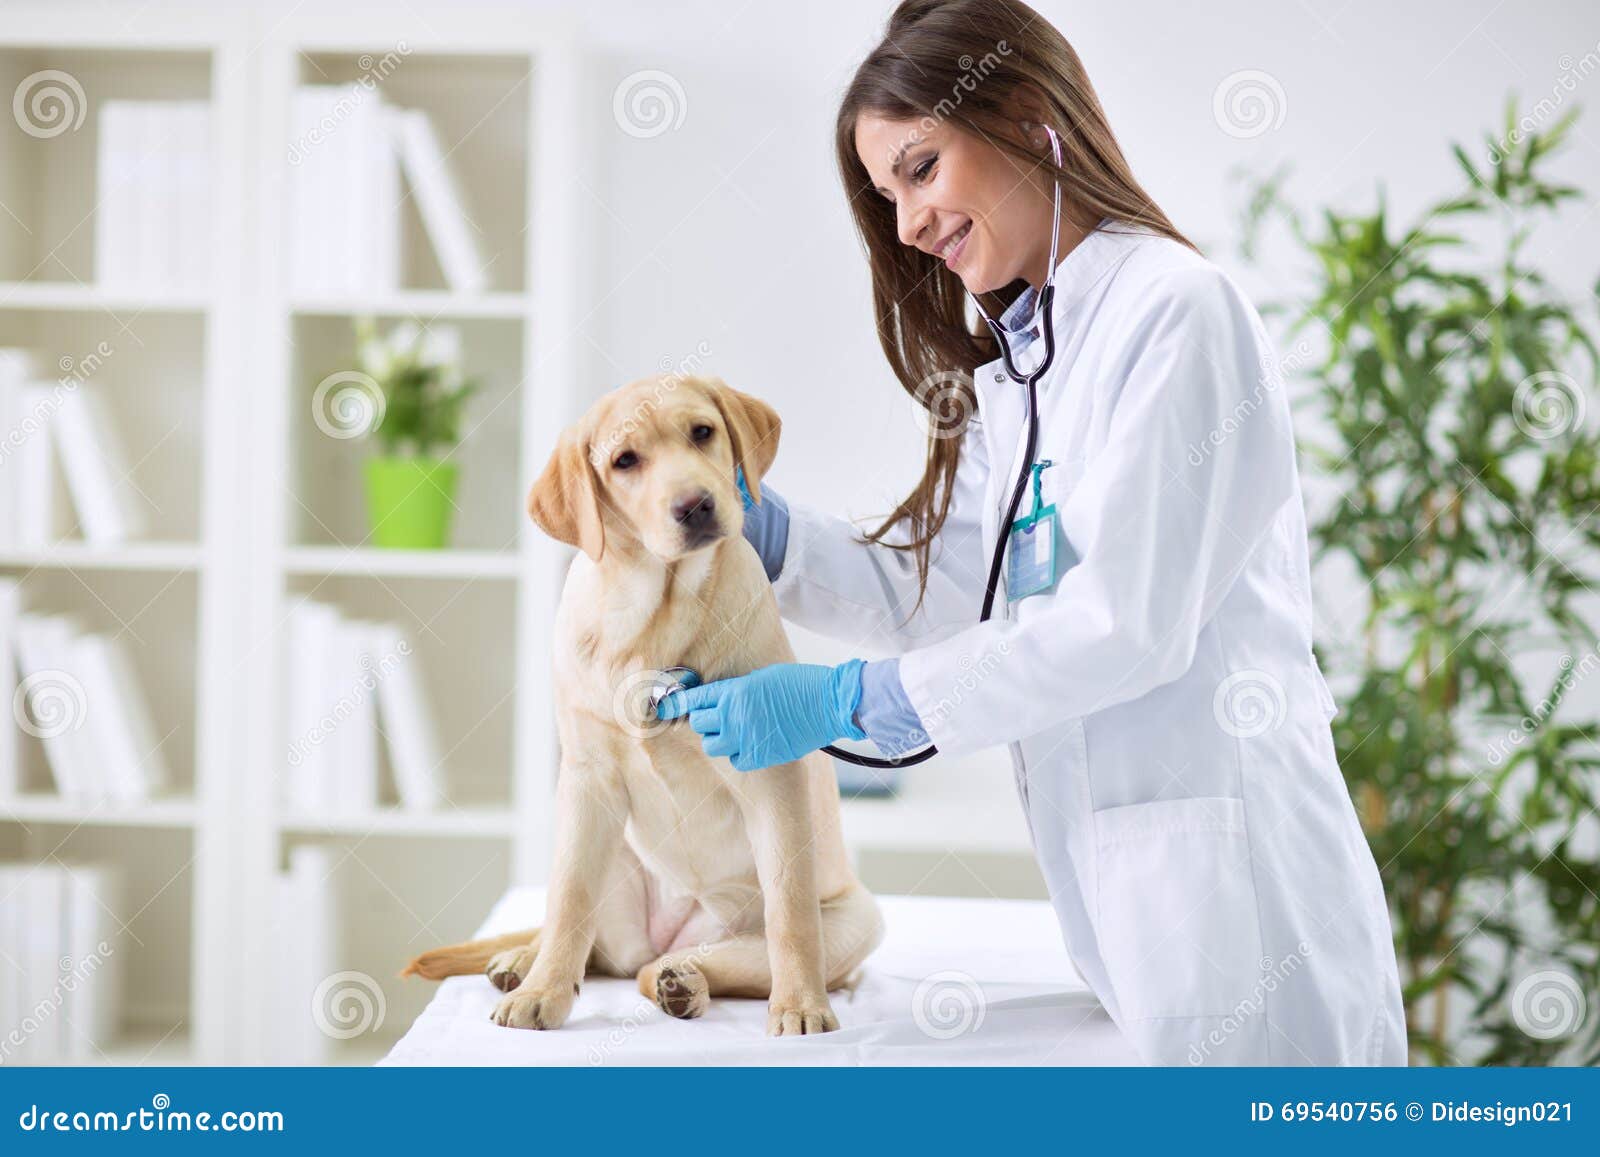 veterinarian doctor and a labrador puppy